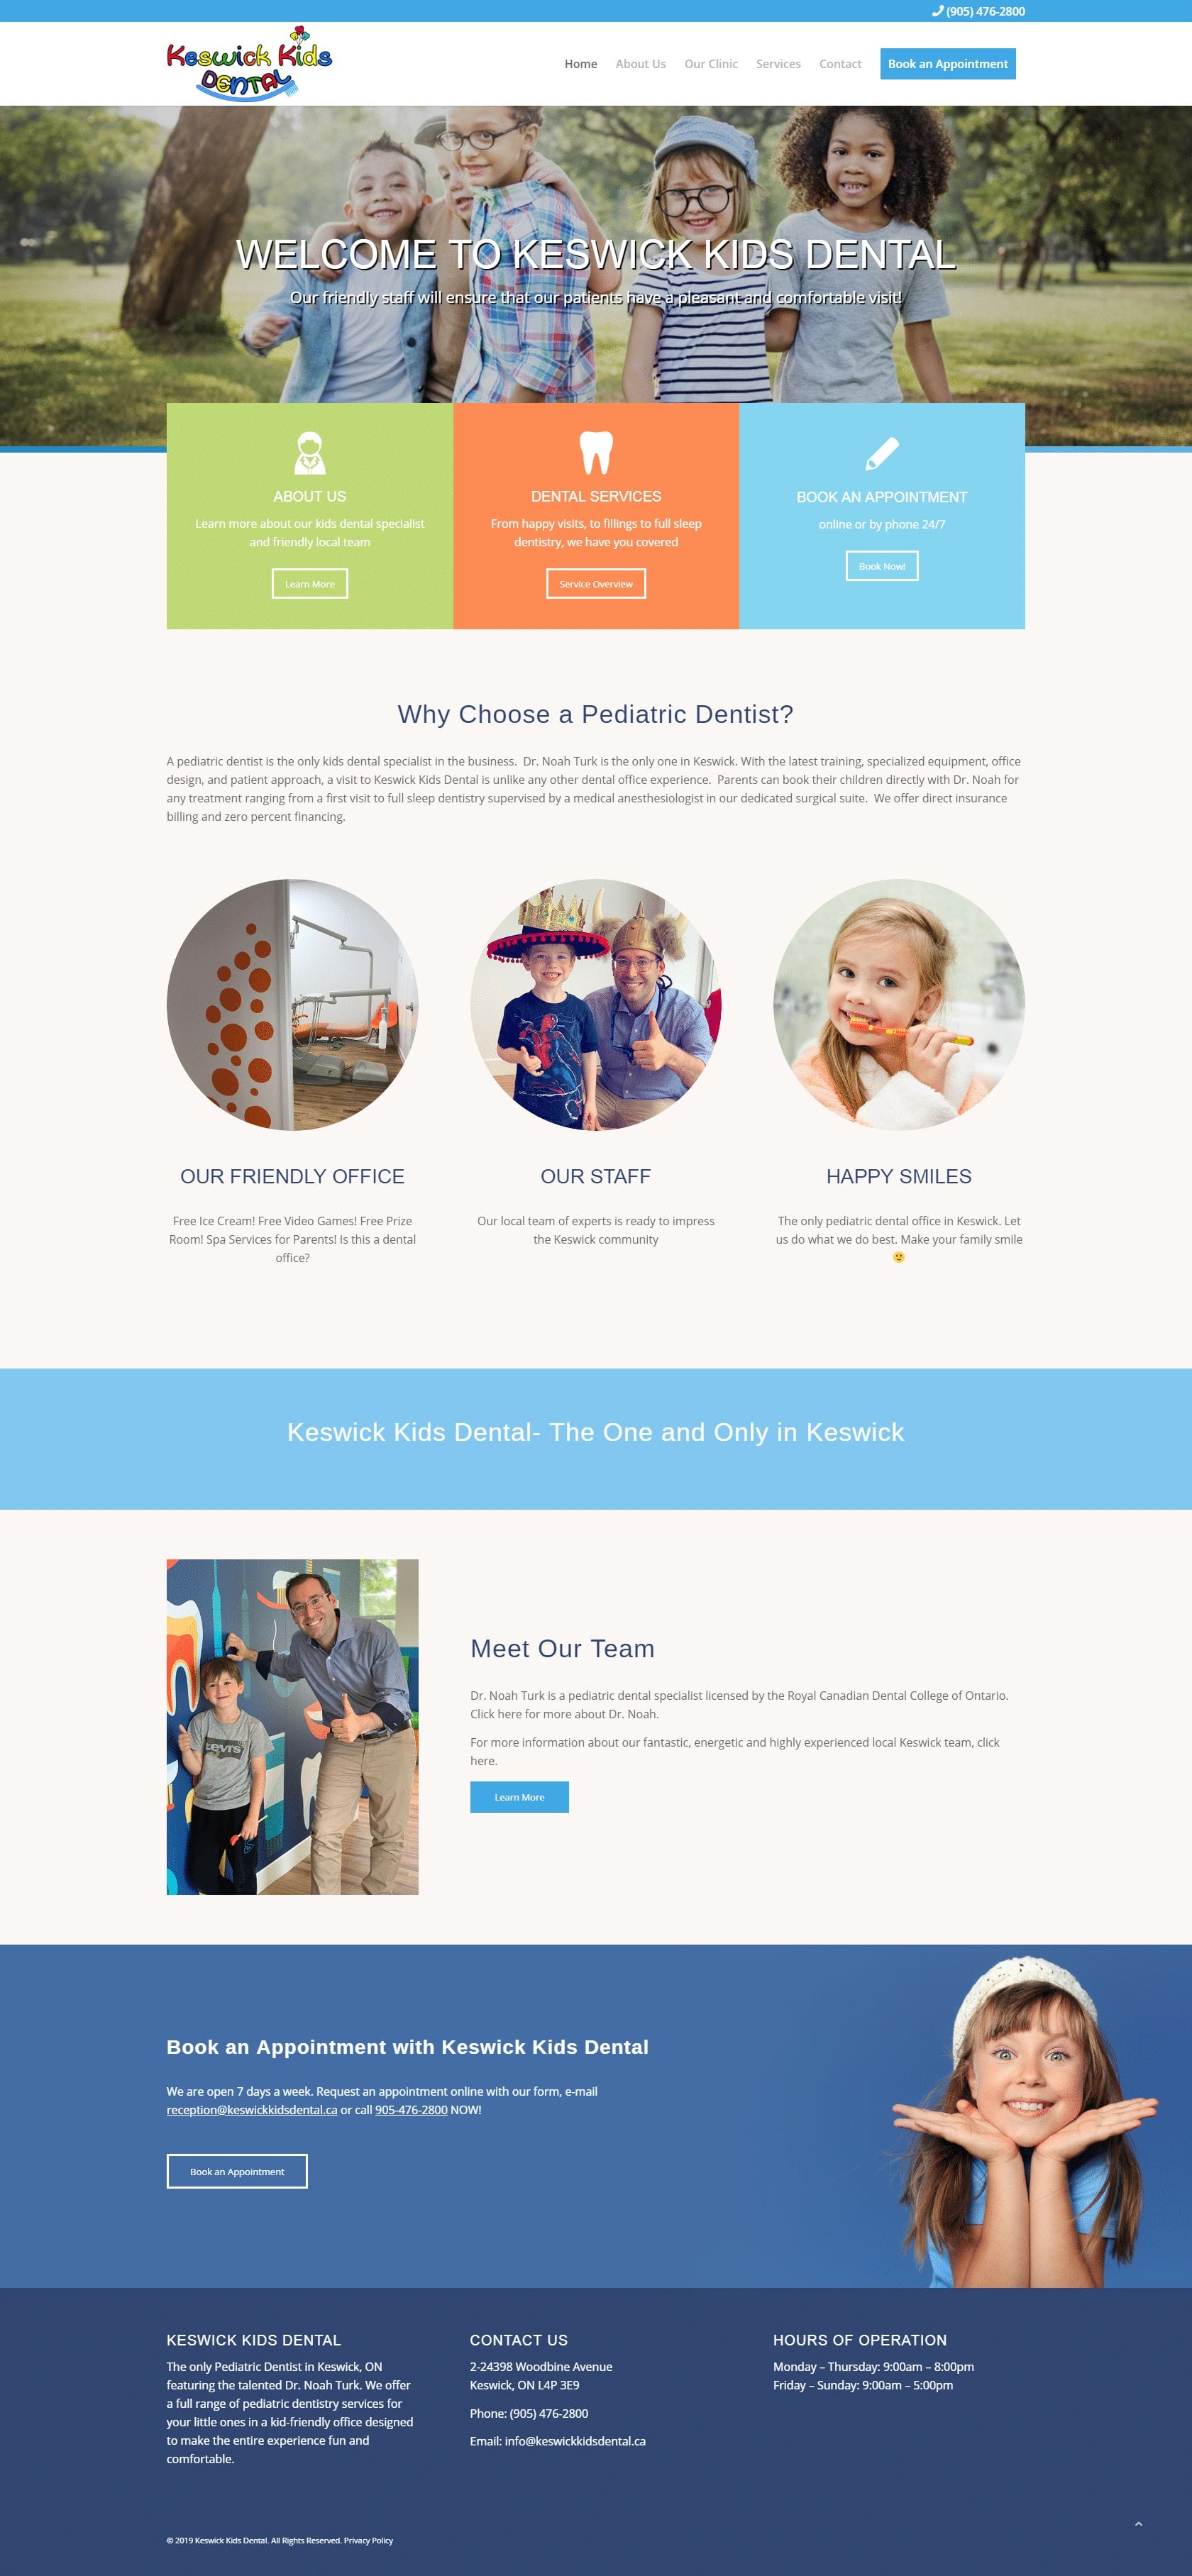 Keswick Kids Dental website design layout